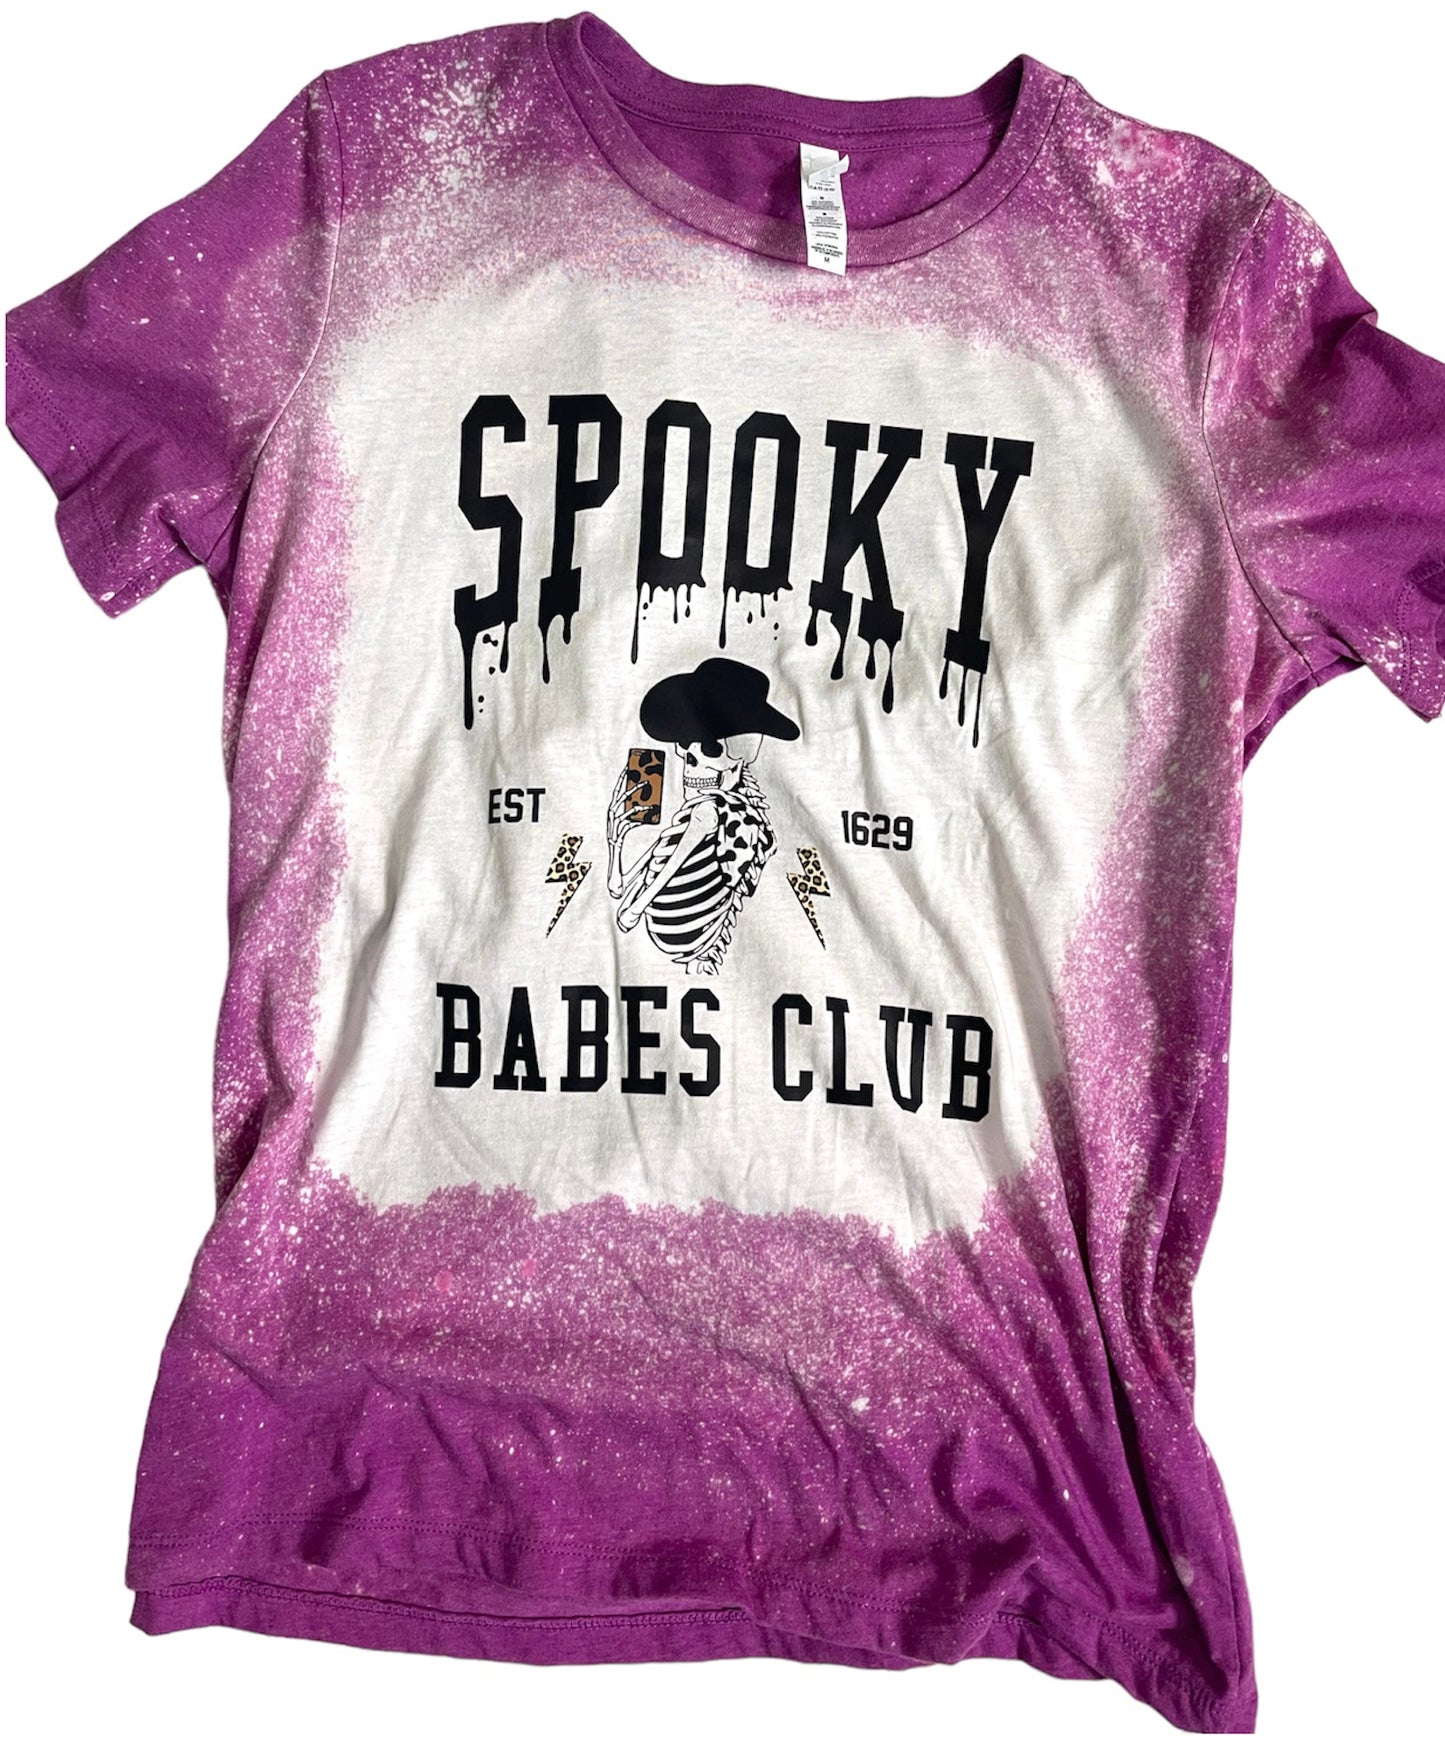 Spooky Babes Club Tee